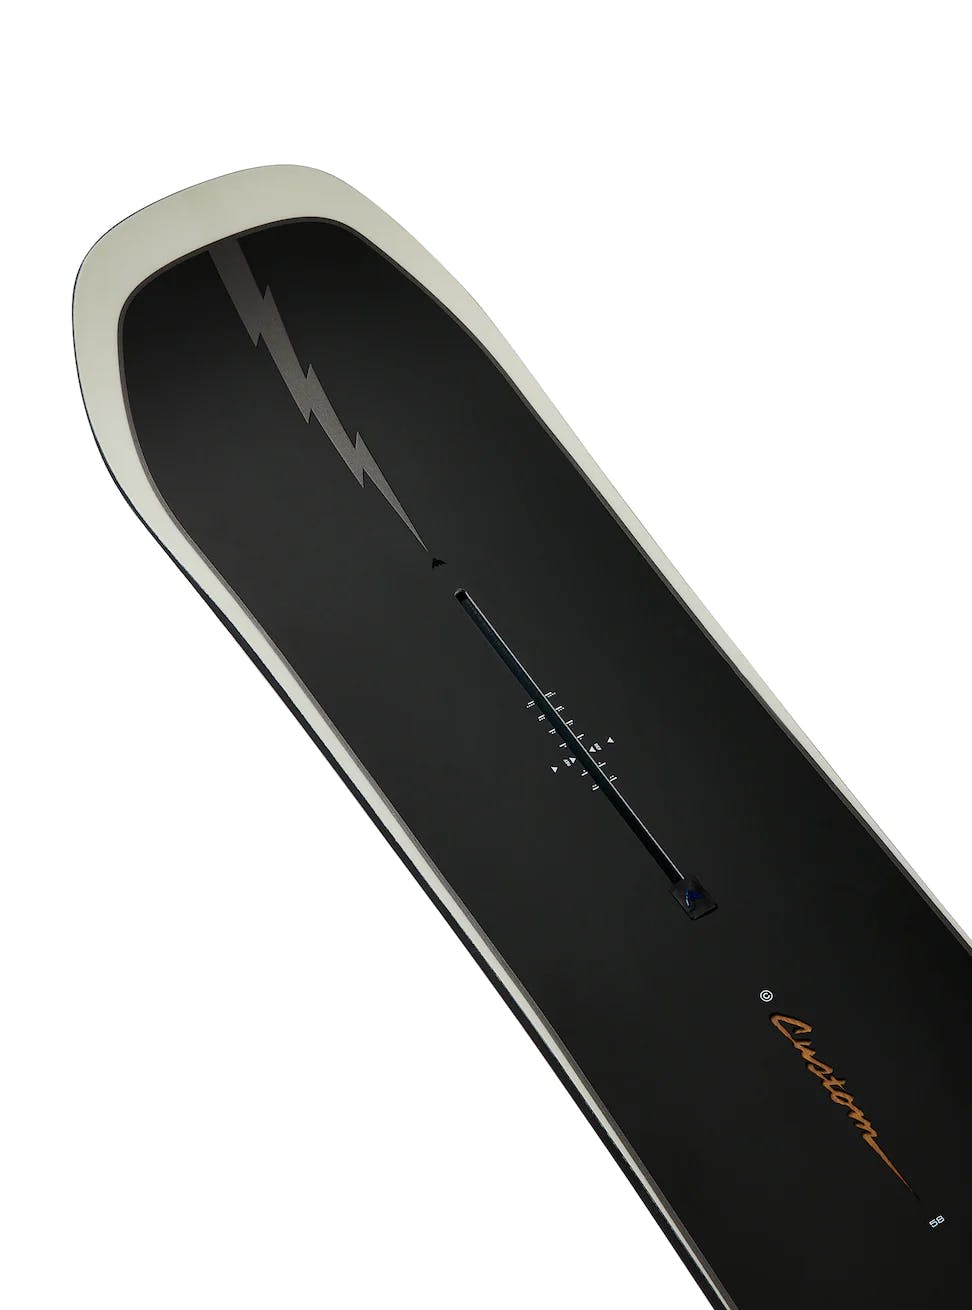 Burton Custom Snowboard · 2023 · 154 cm